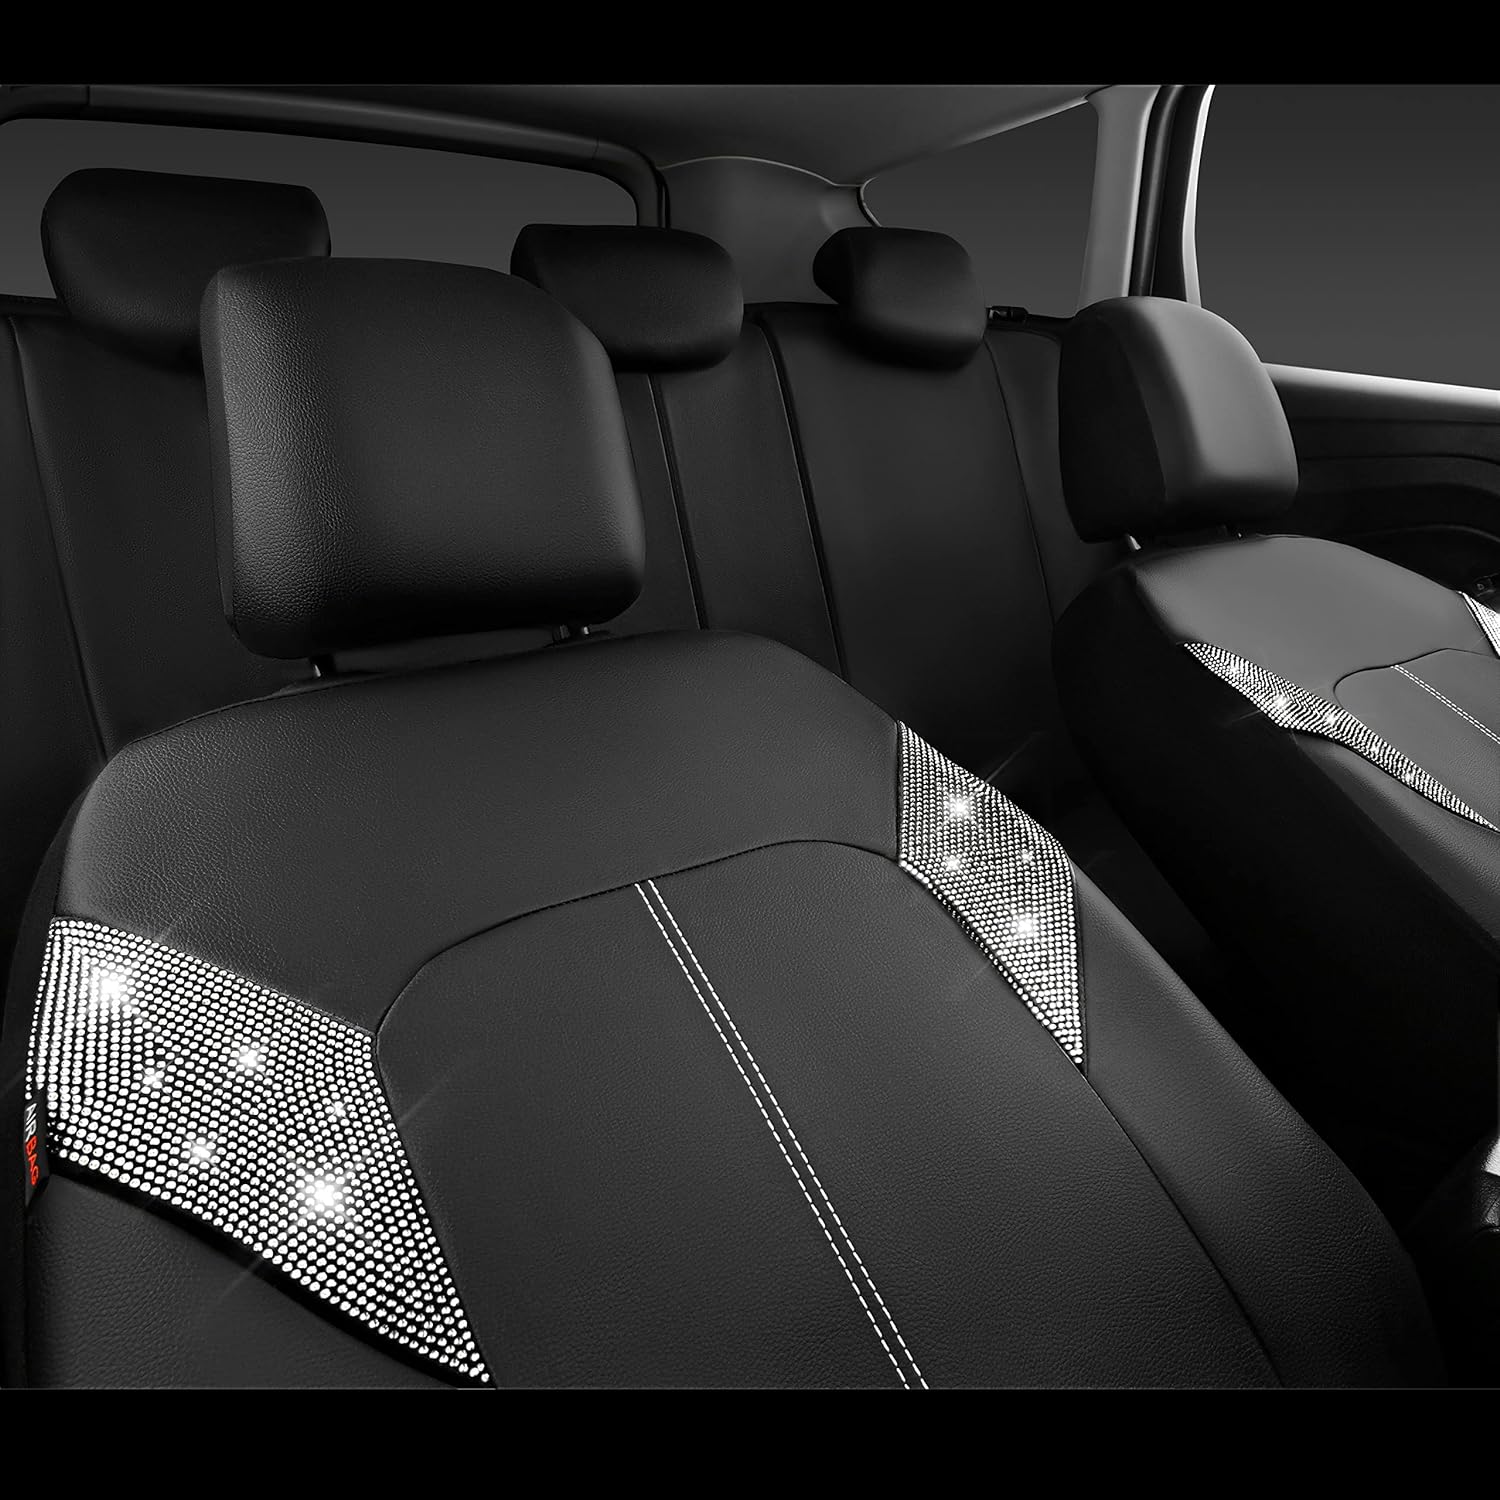 CAR PASS Bling Car Seat Covers Shining Rhinestone Diamond Waterproof Faux Leather Full Set Universal Fit 95% Automotive Glitter Crystal Sparkle Strips for Cute Women Girl, Black Diamond